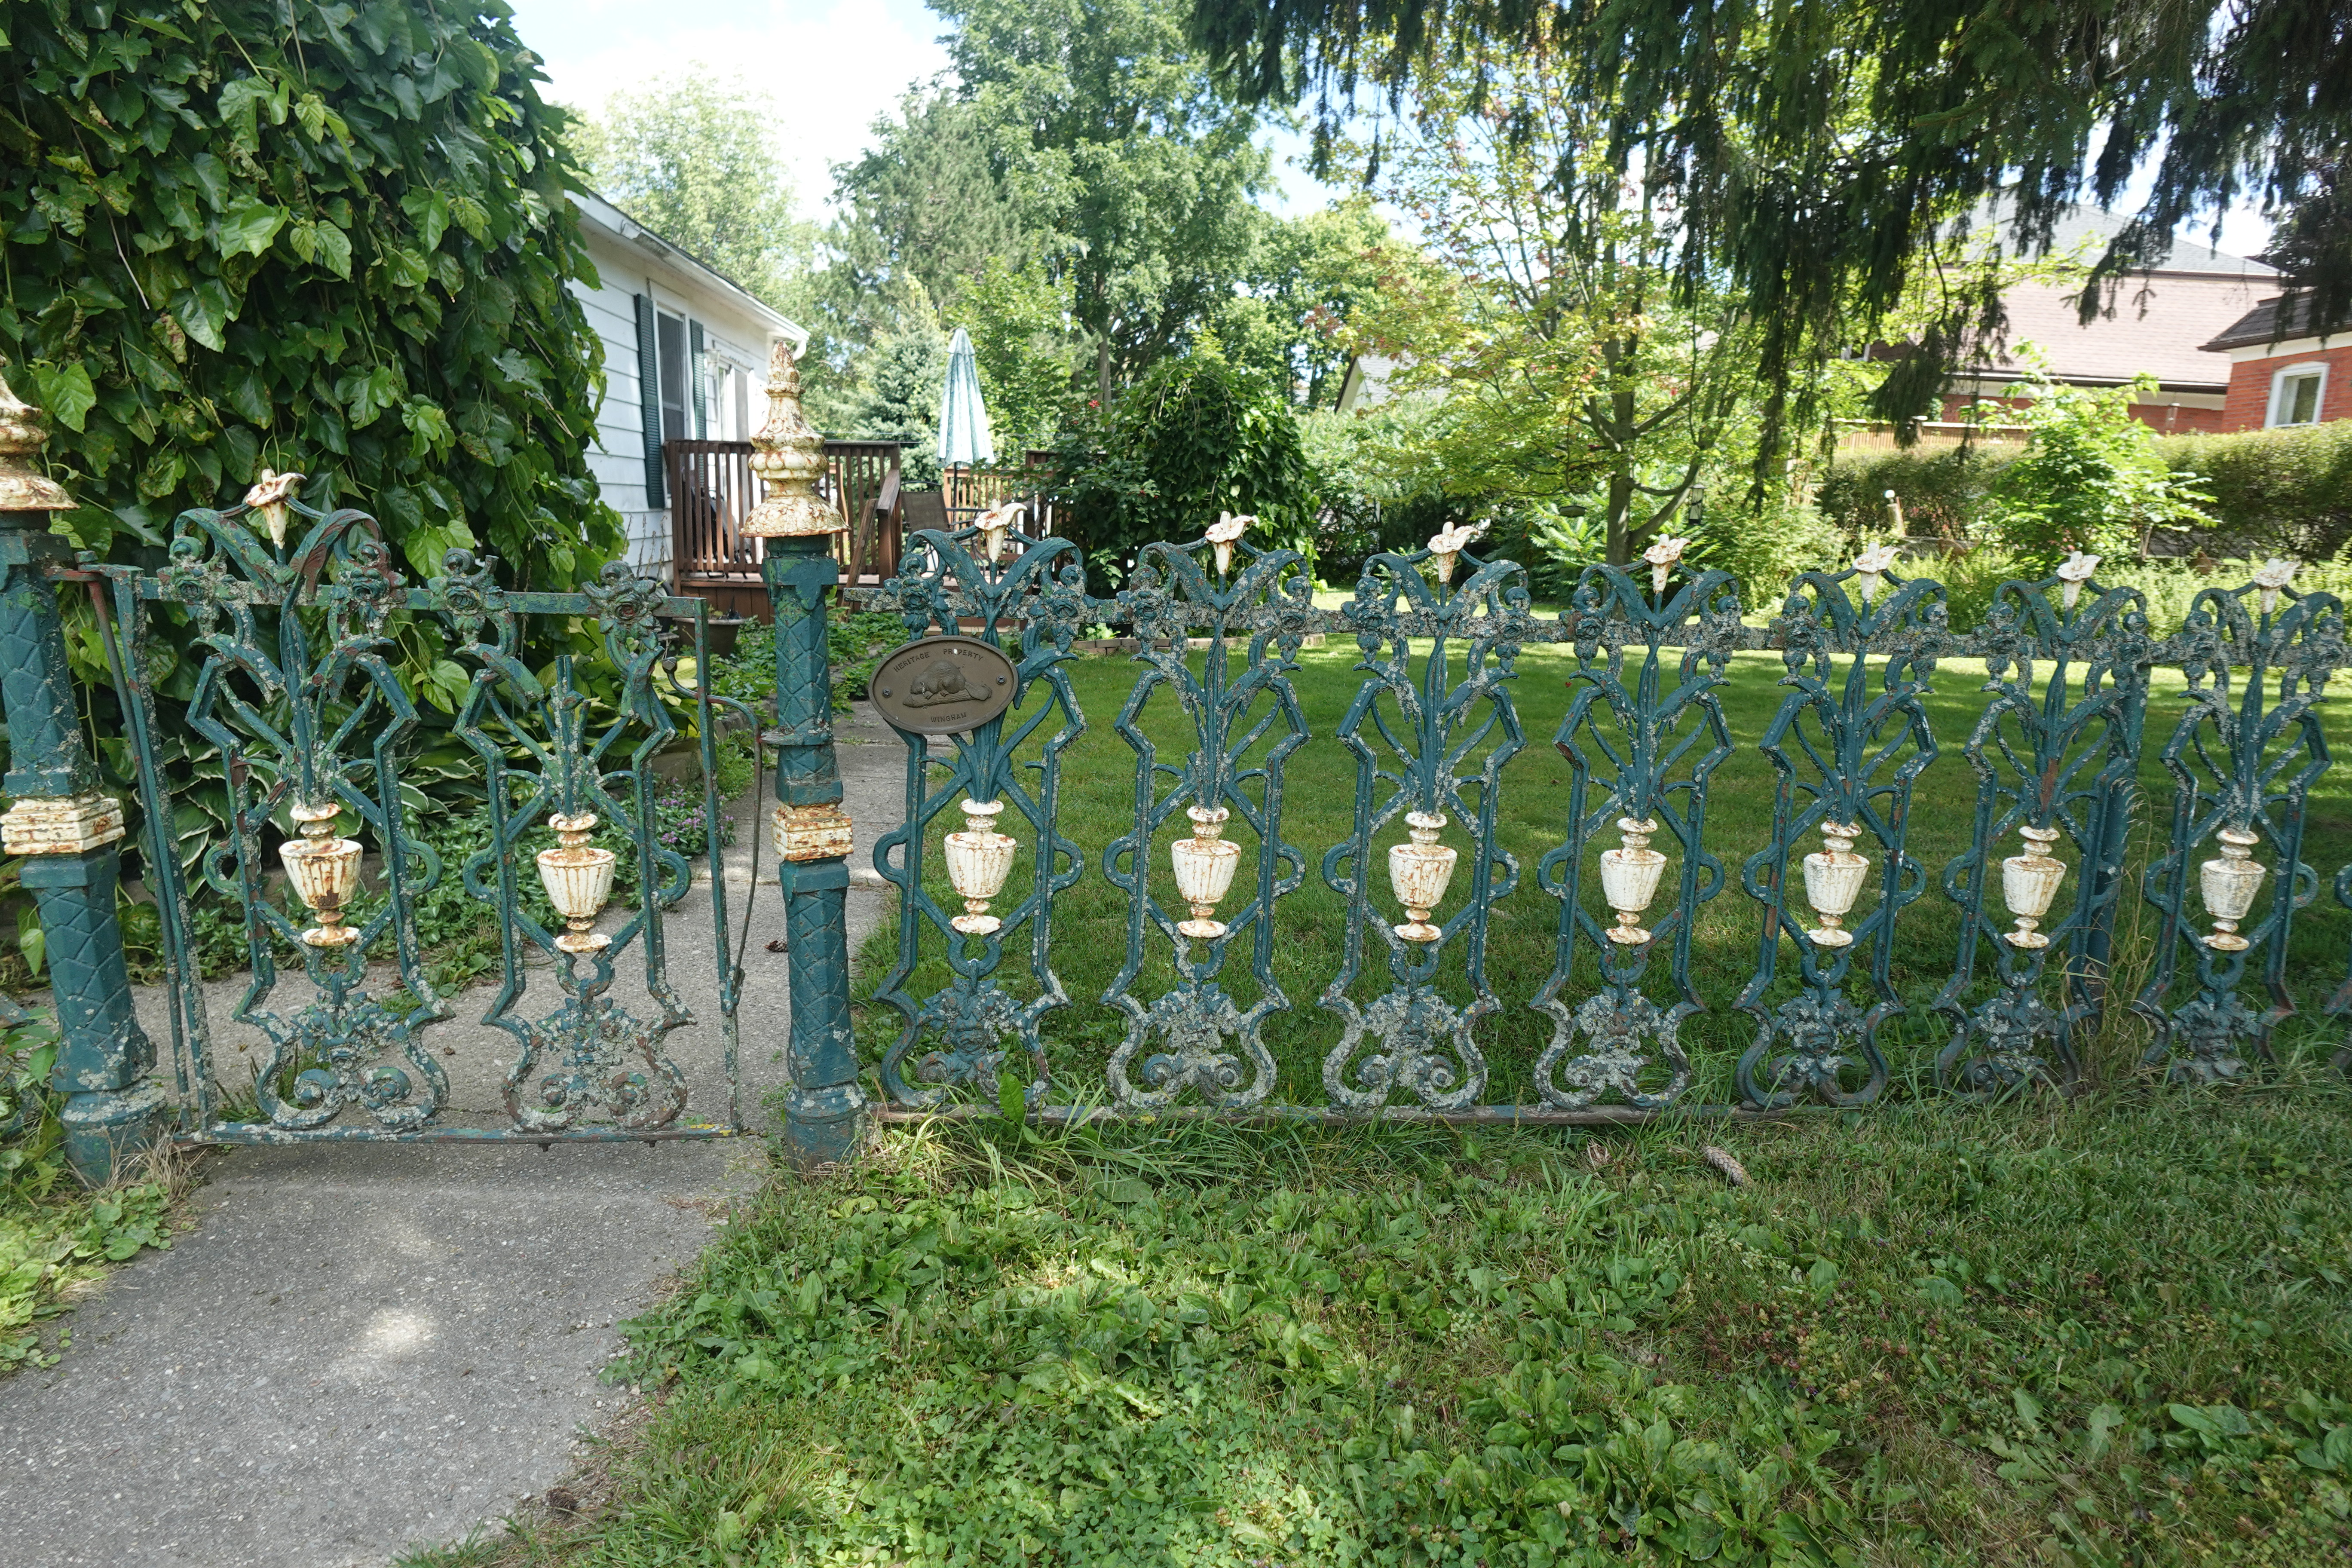 A photo of the John Ansley cast iron fence